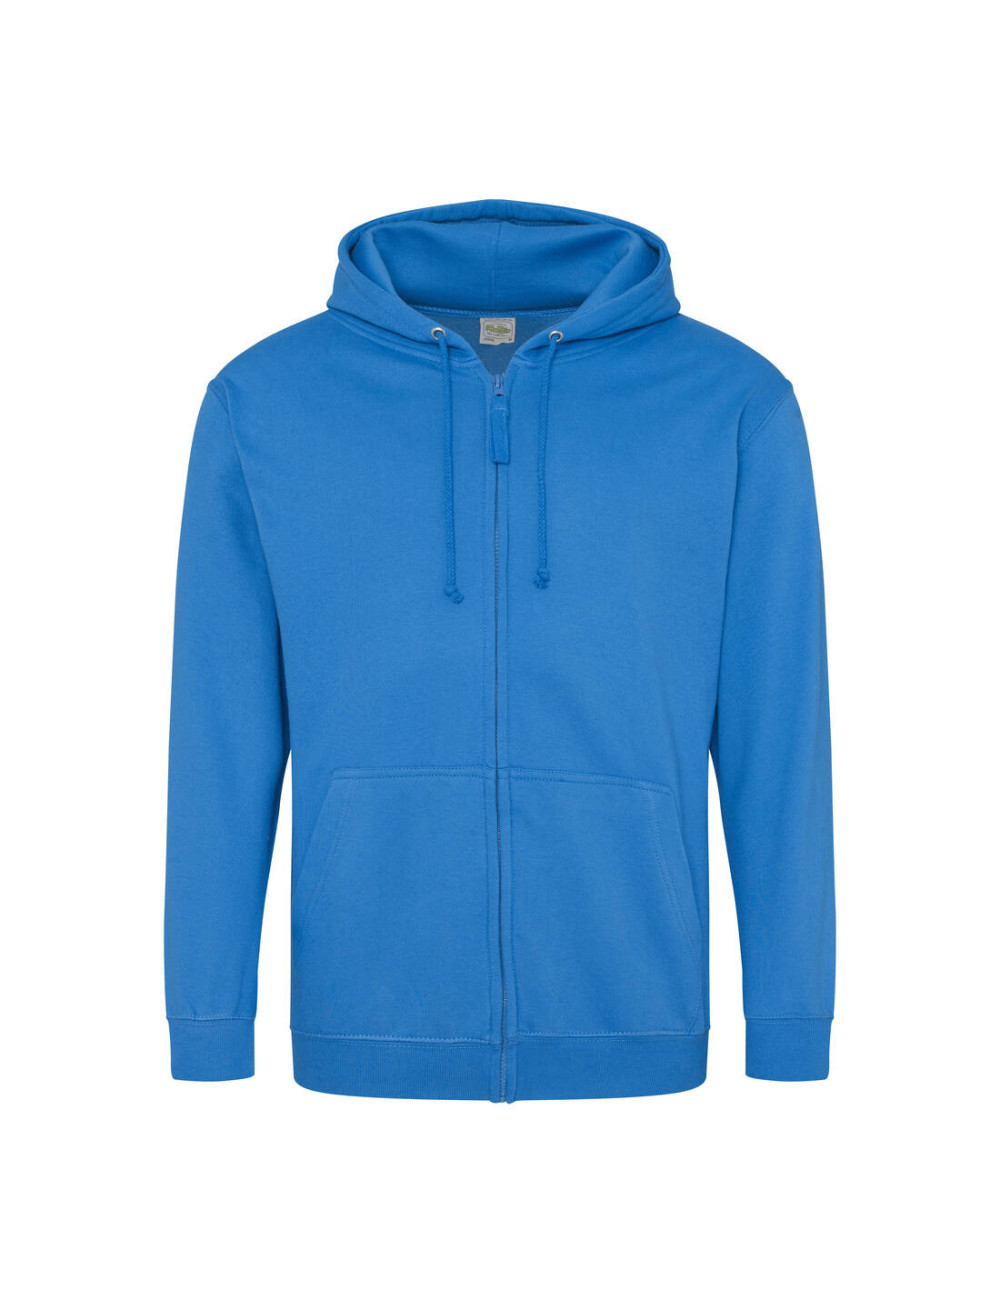 AWDIS JH050 - Zipped sweatshirt  Colors:Sapphire Blue 